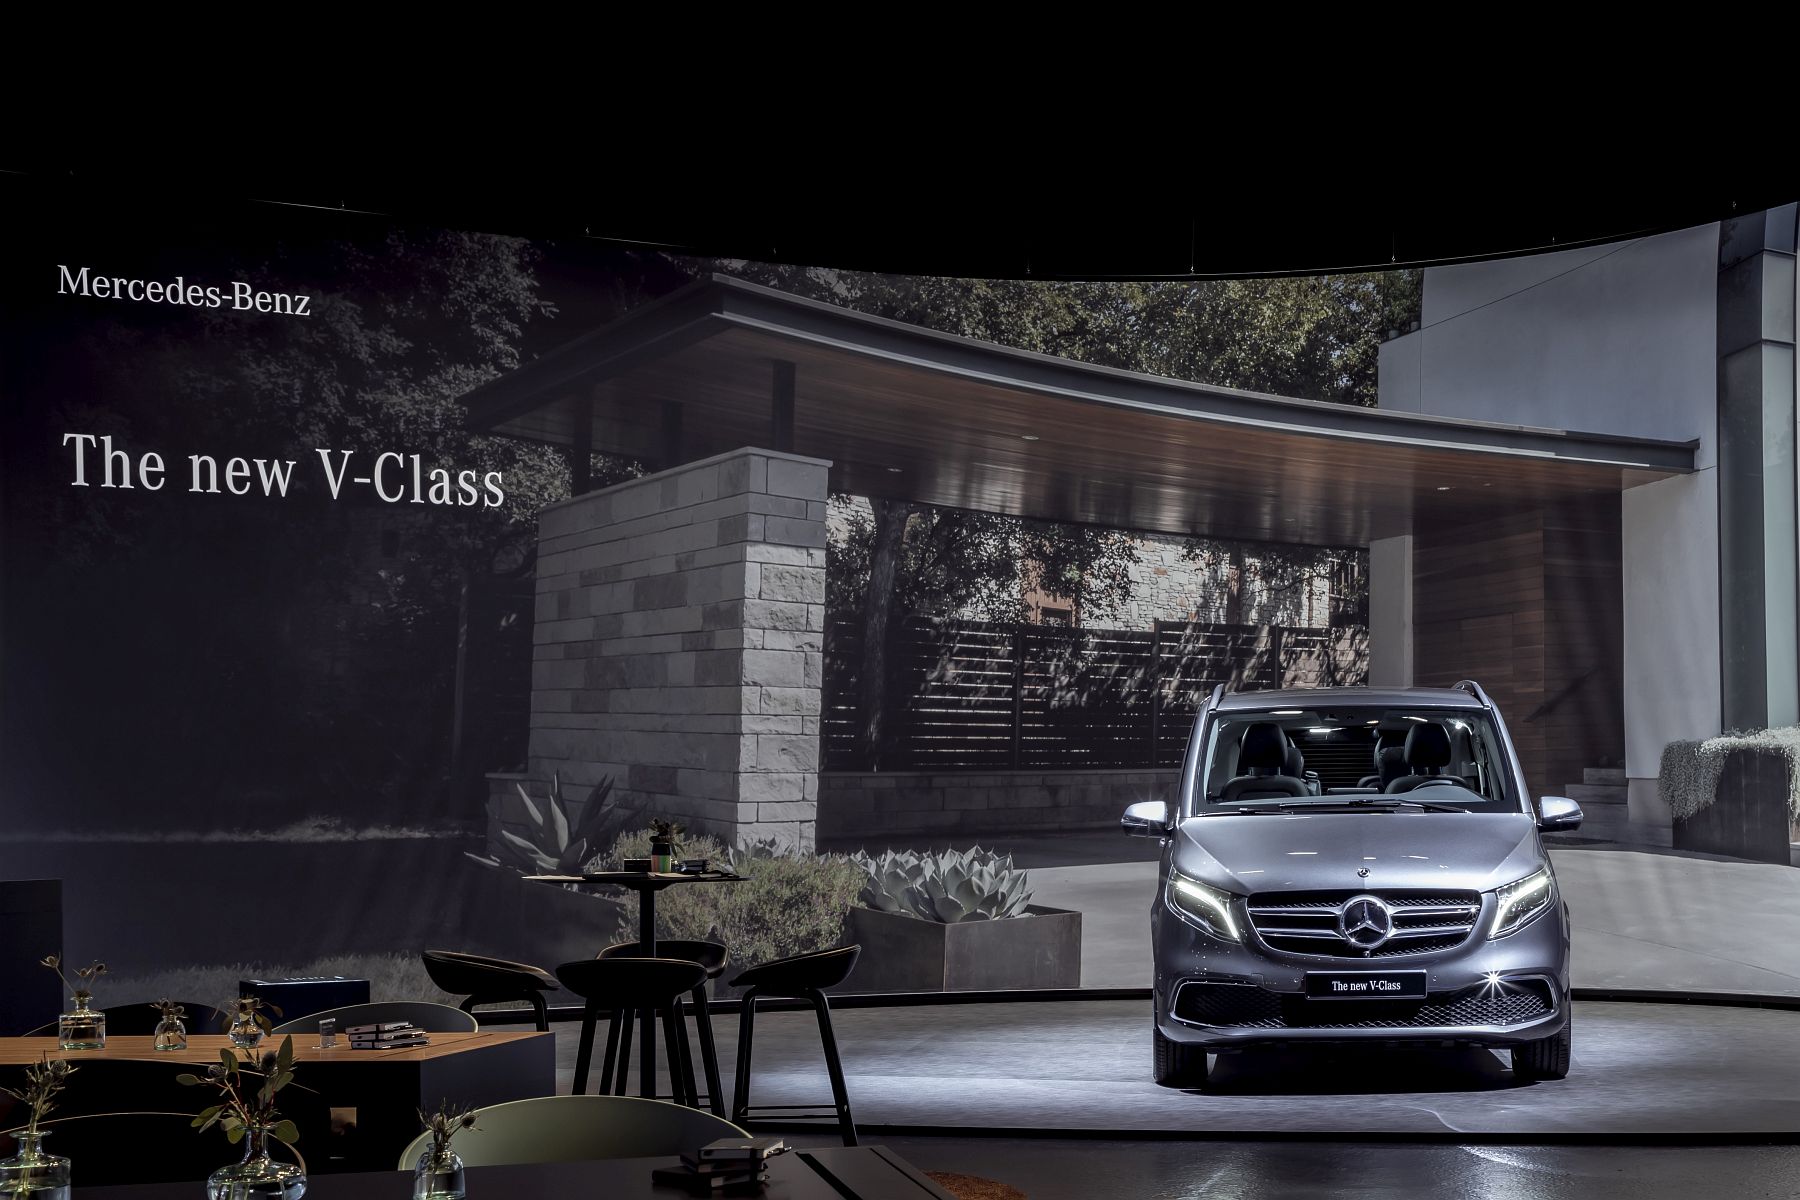 Vorstellung der neuen Mercedes-Benz V-Klasse 2019

Presentation of the new Mercedes-Benz V-Class 2019